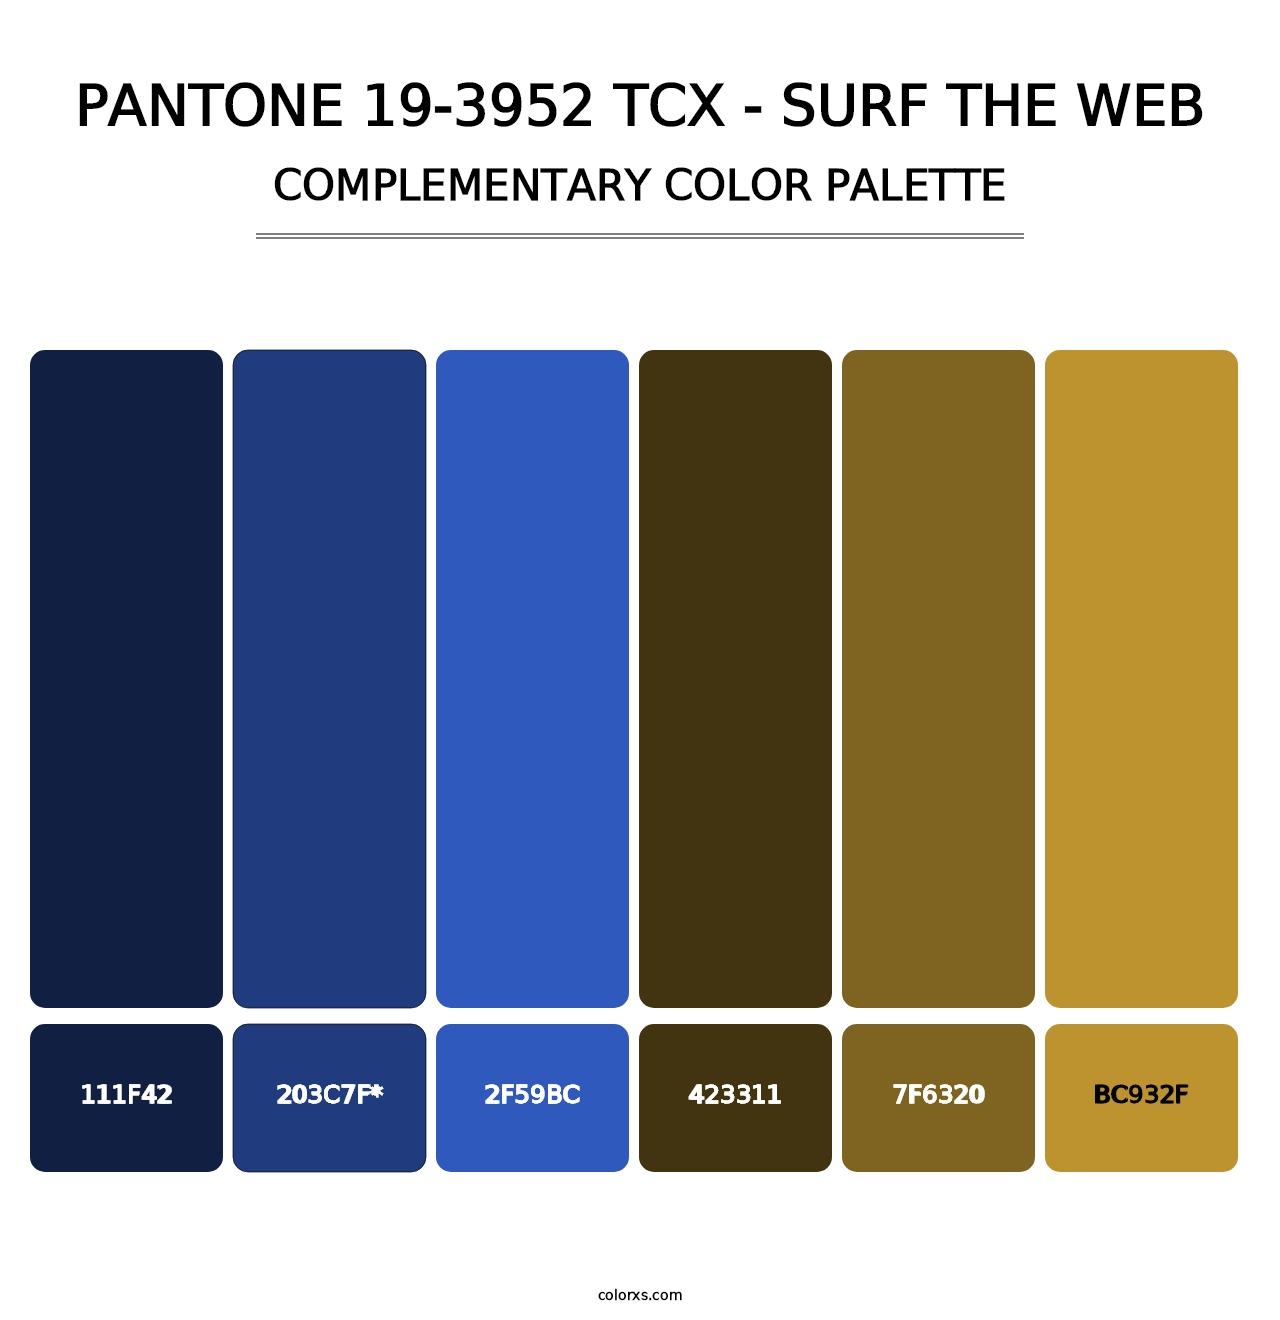 PANTONE 19-3952 TCX - Surf the Web - Complementary Color Palette